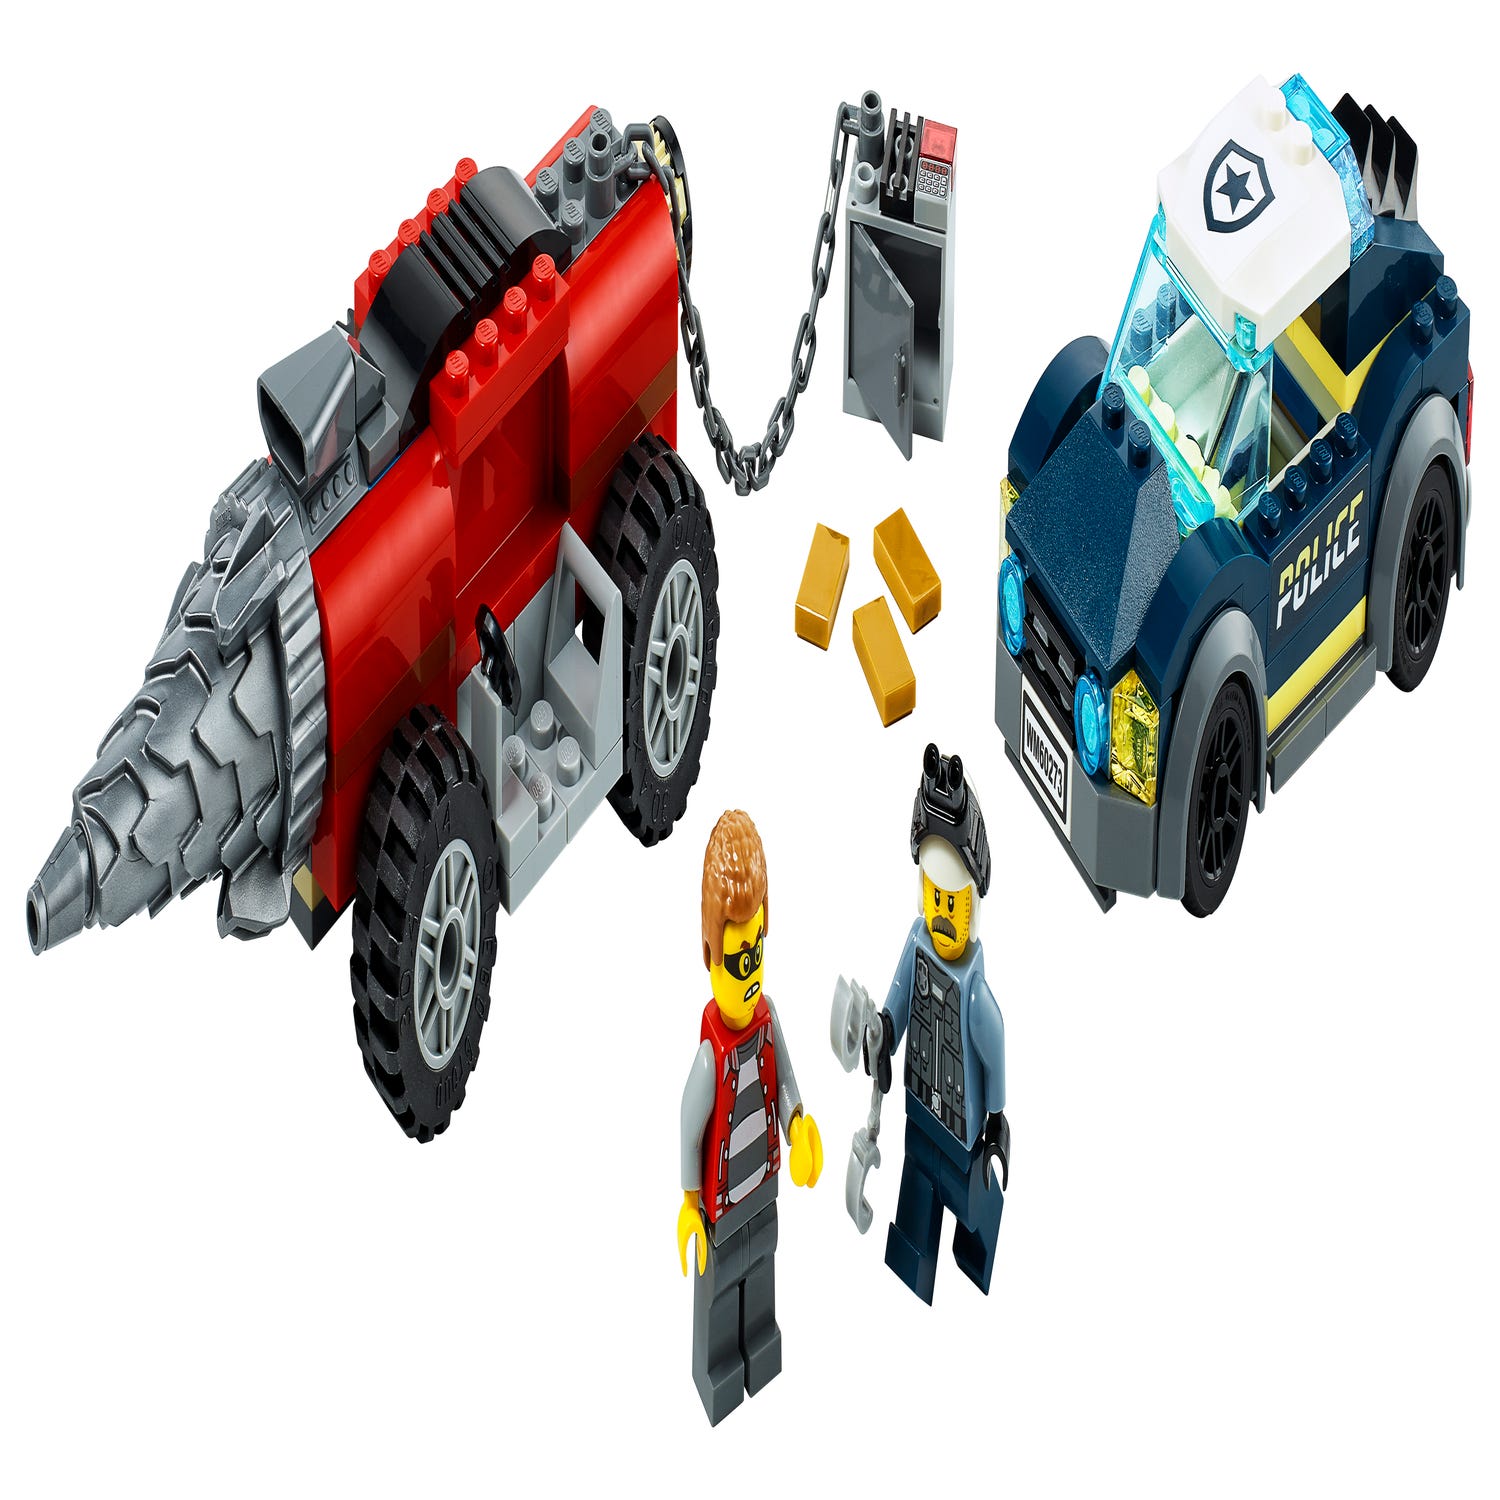 Elite Police Driller Chase 60273 City Buy Online At The Official Lego Shop De